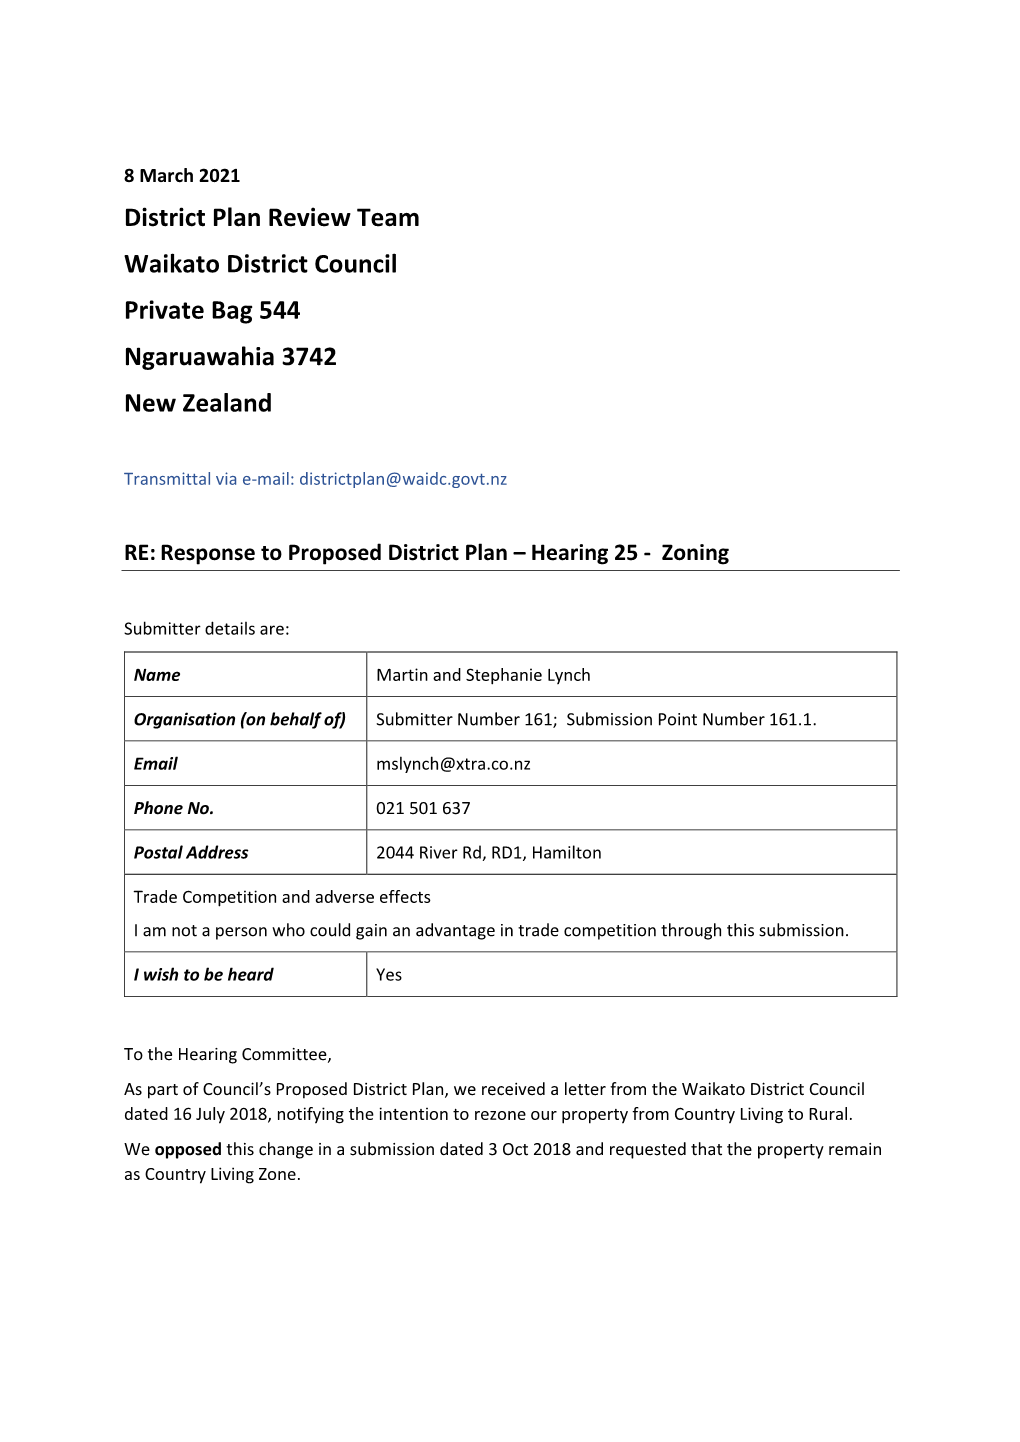 District Plan Review Team Waikato District Council Private Bag 544 Ngaruawahia 3742 New Zealand